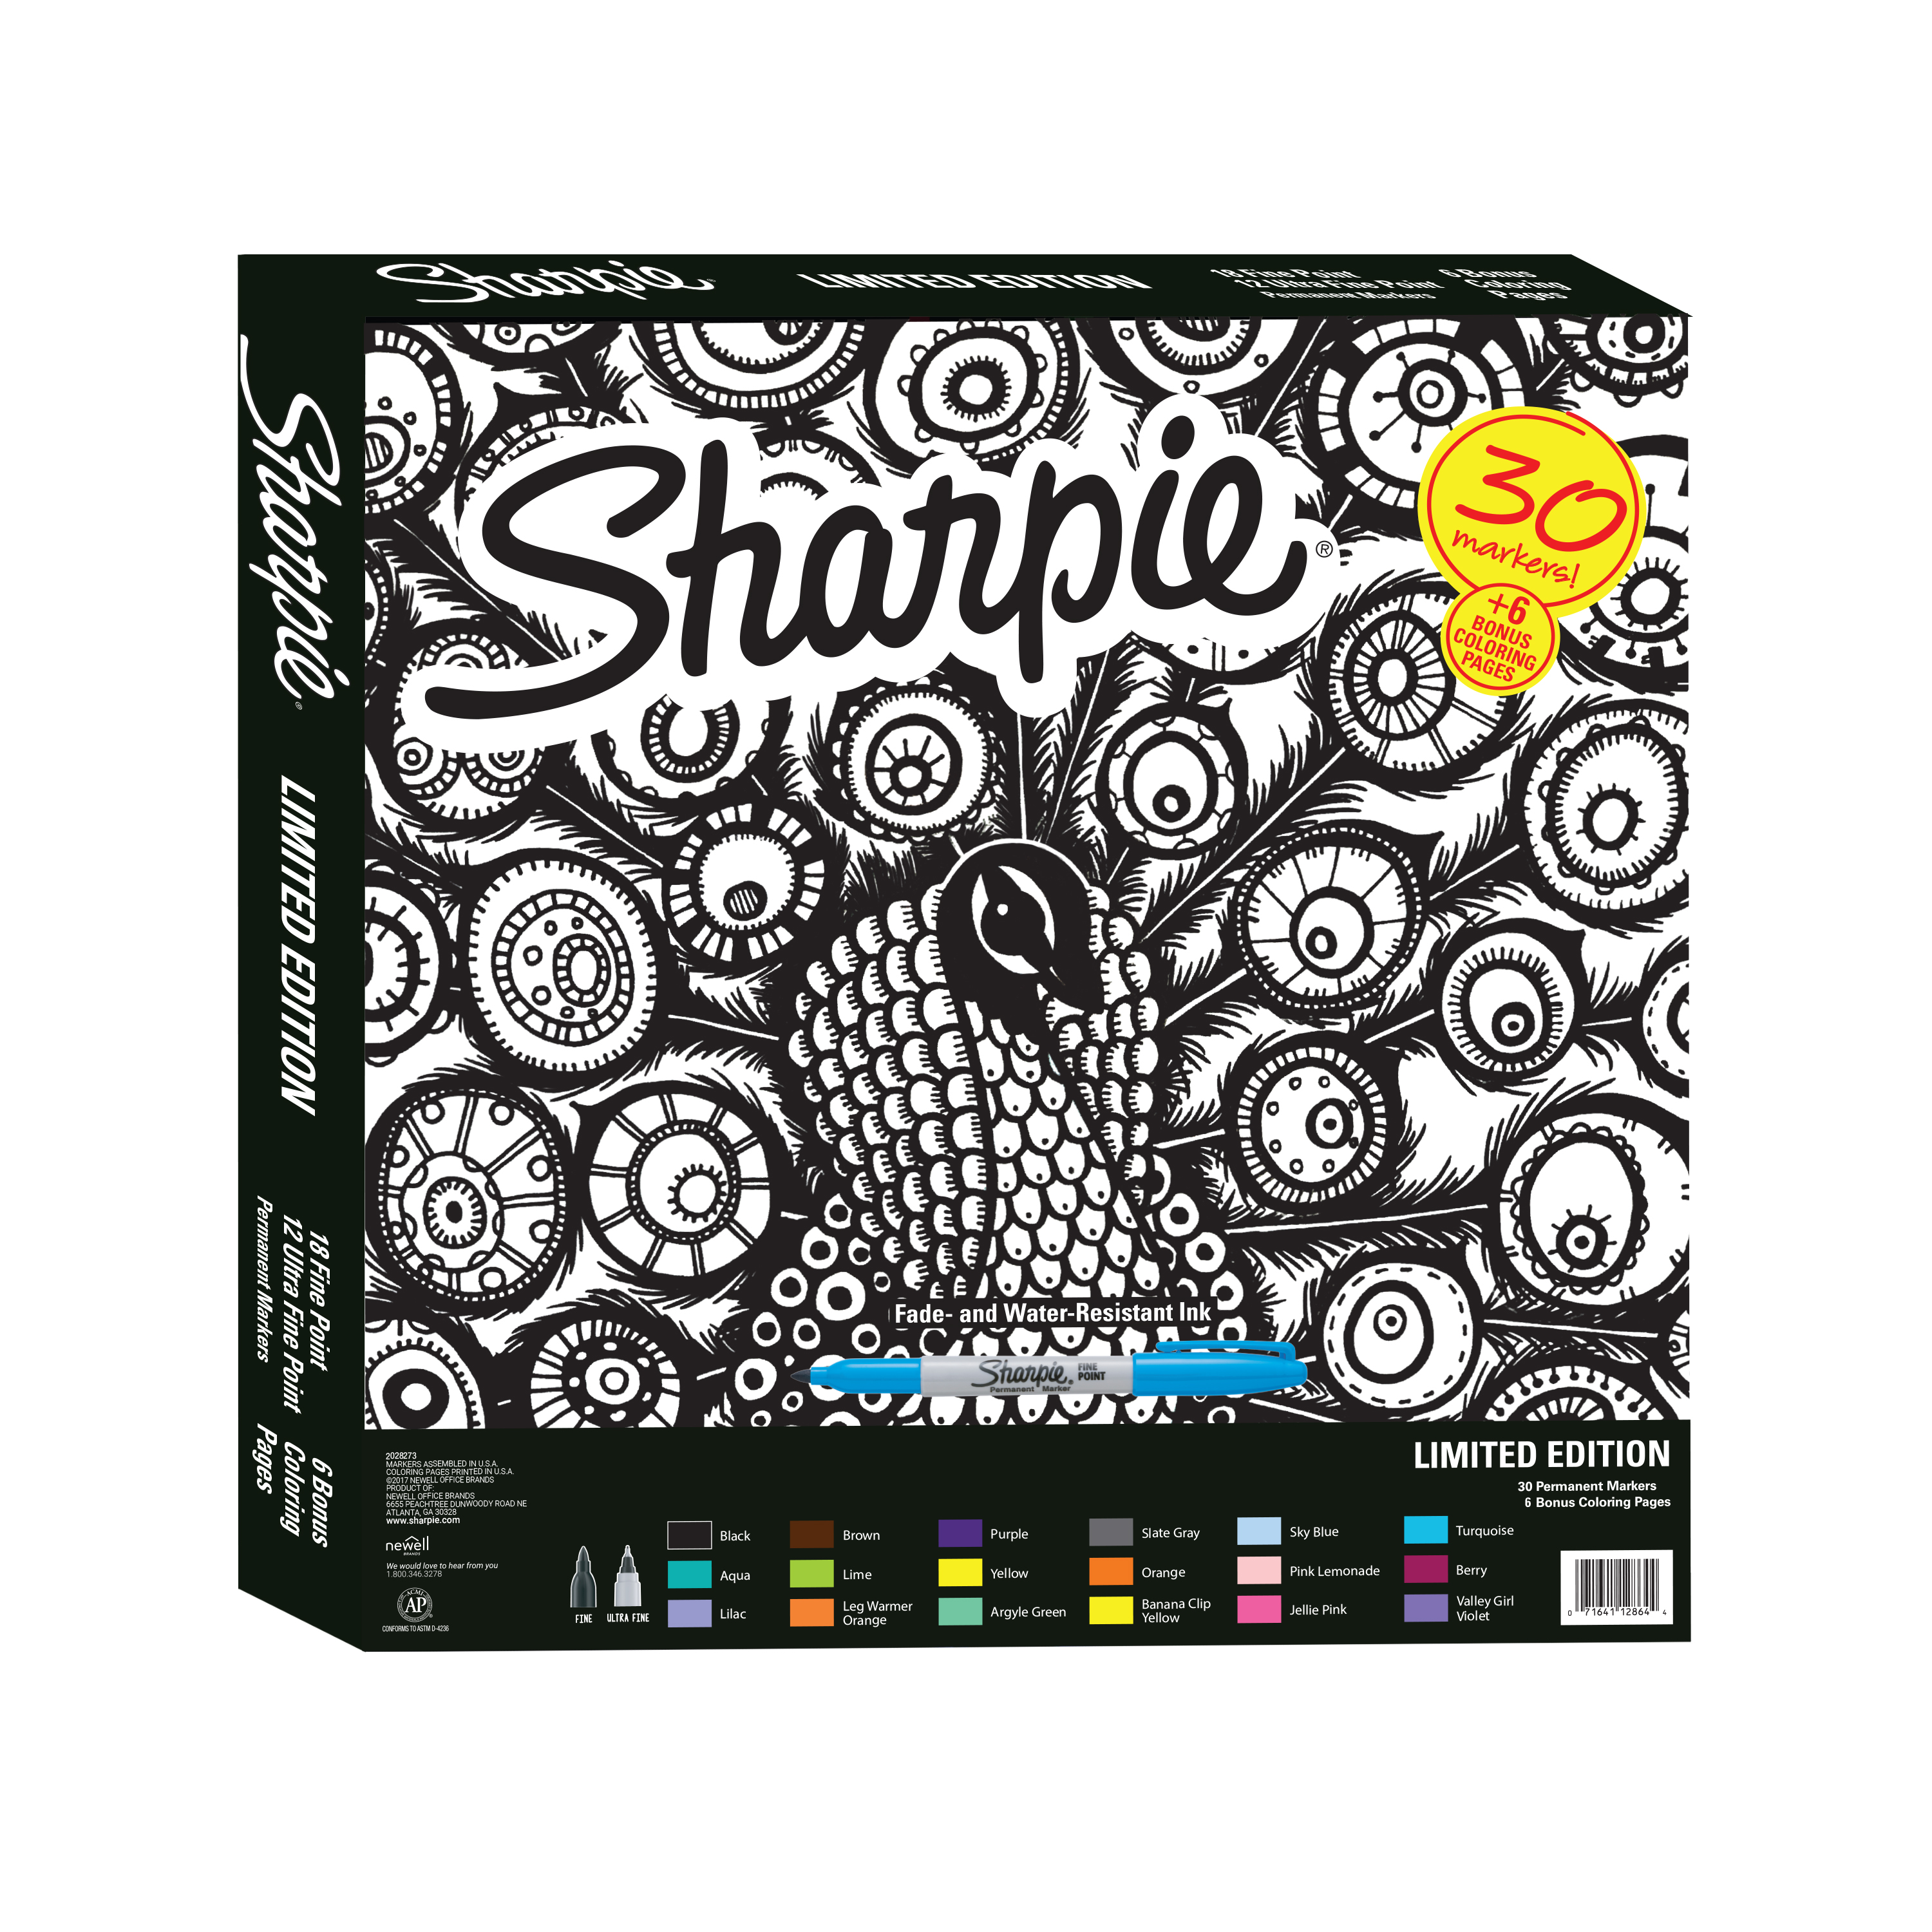 Sharpie Permanent Marker Limited Edition Set, Exclusive Color Assortment, plus 6 Bonus Coloring Sheets, 36 Count - image 3 of 9